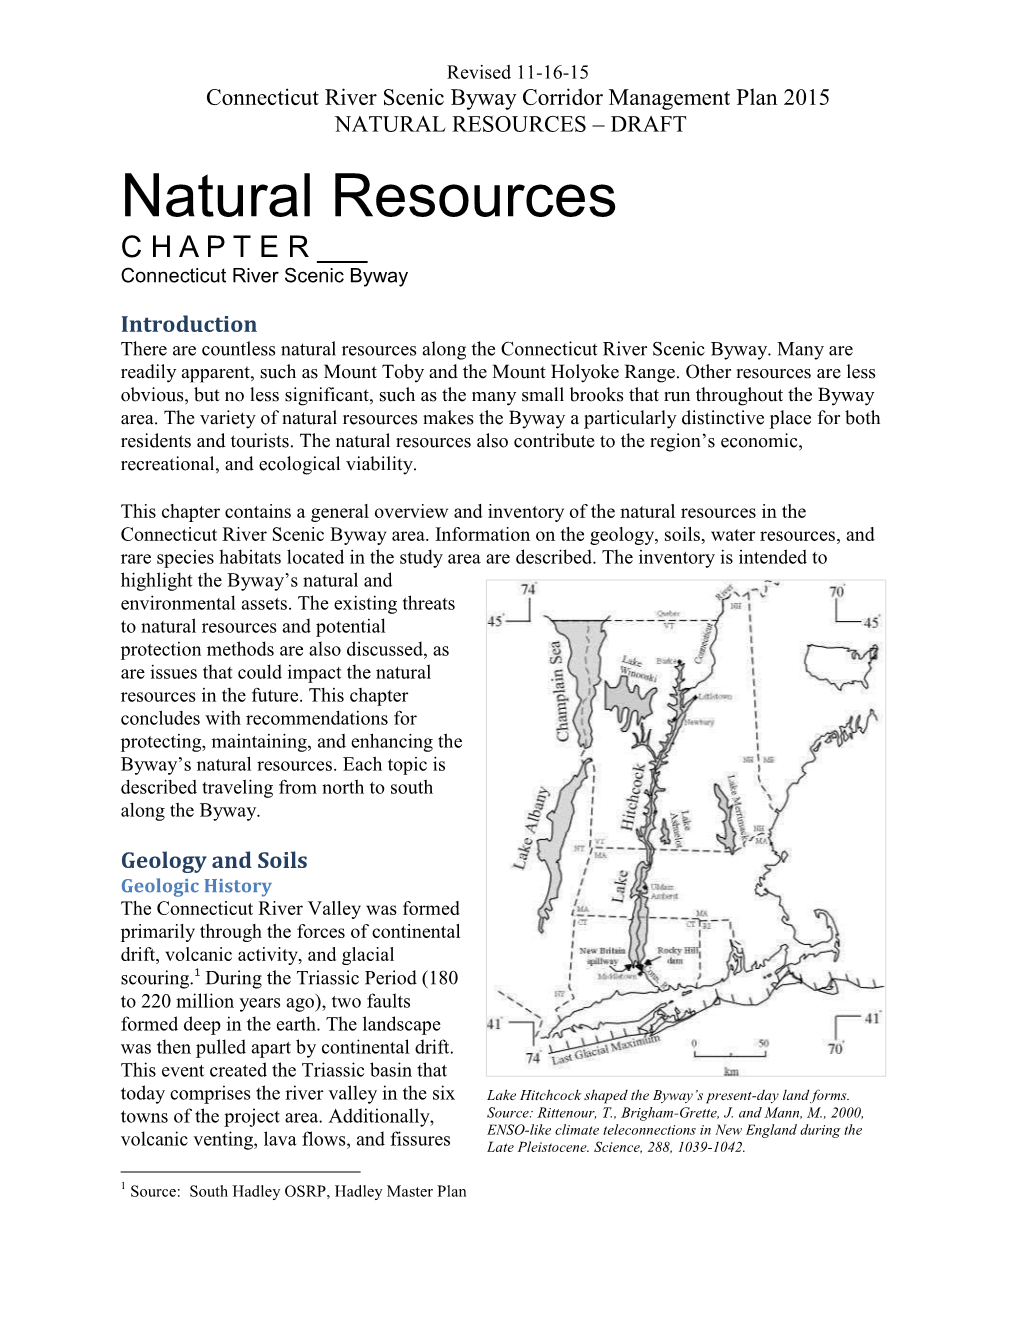 Natural Resources – Draft